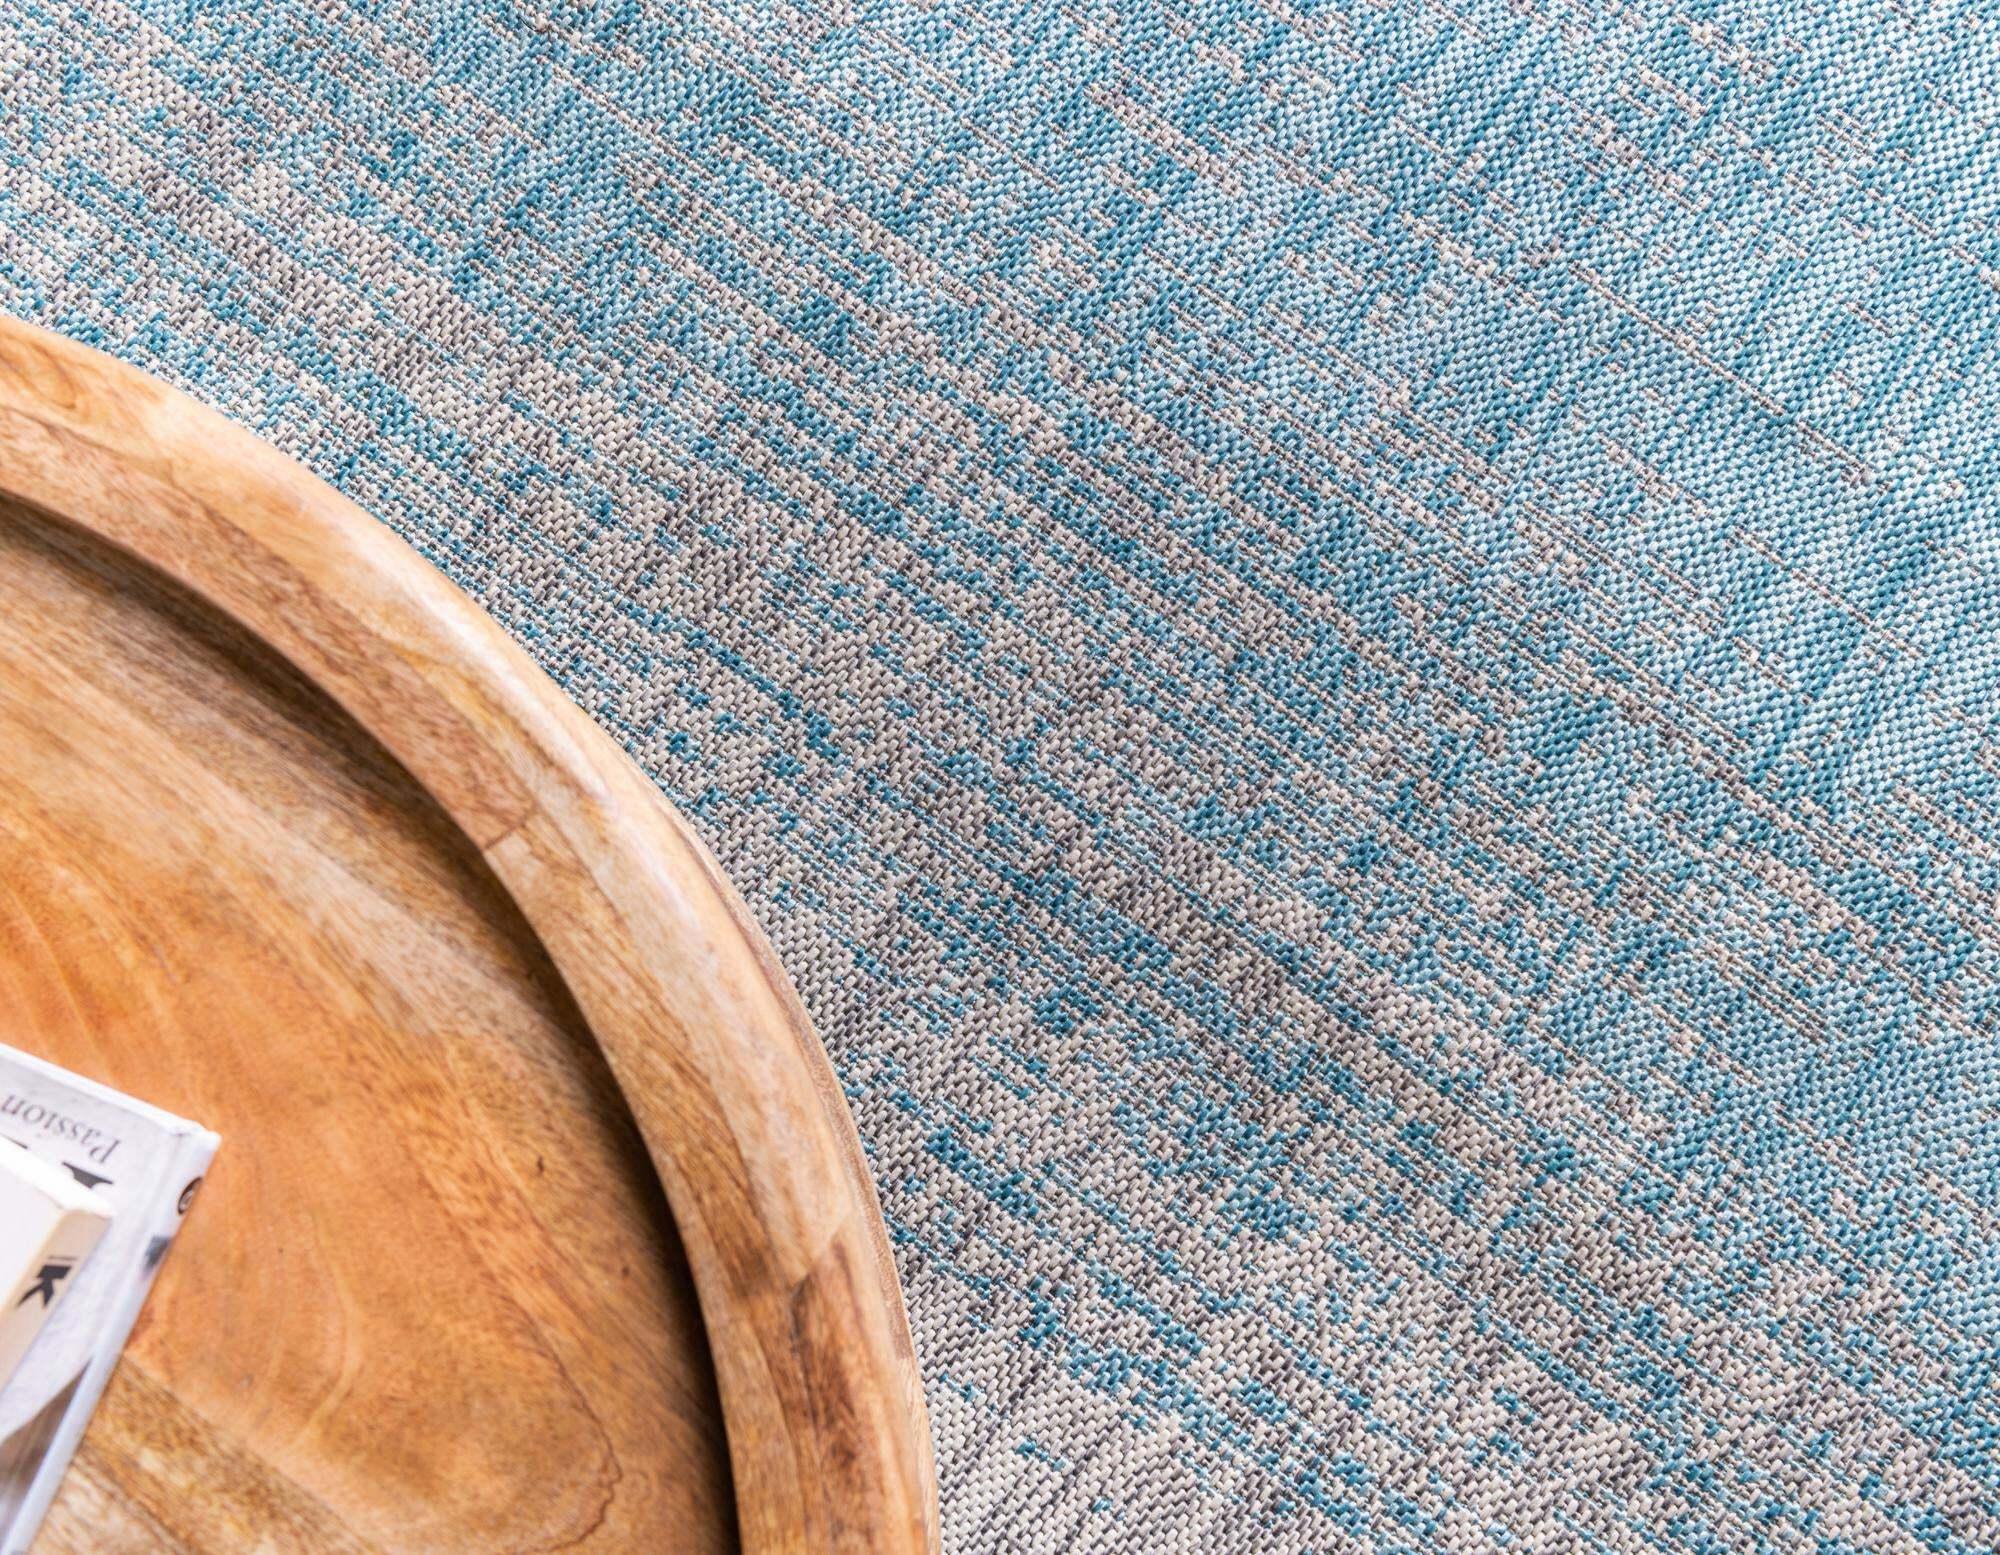 Unique Loom Outdoor Rugs - Outdoor Modern Abstract Rectangular 8x11 Rug Aqua Blue & Beige